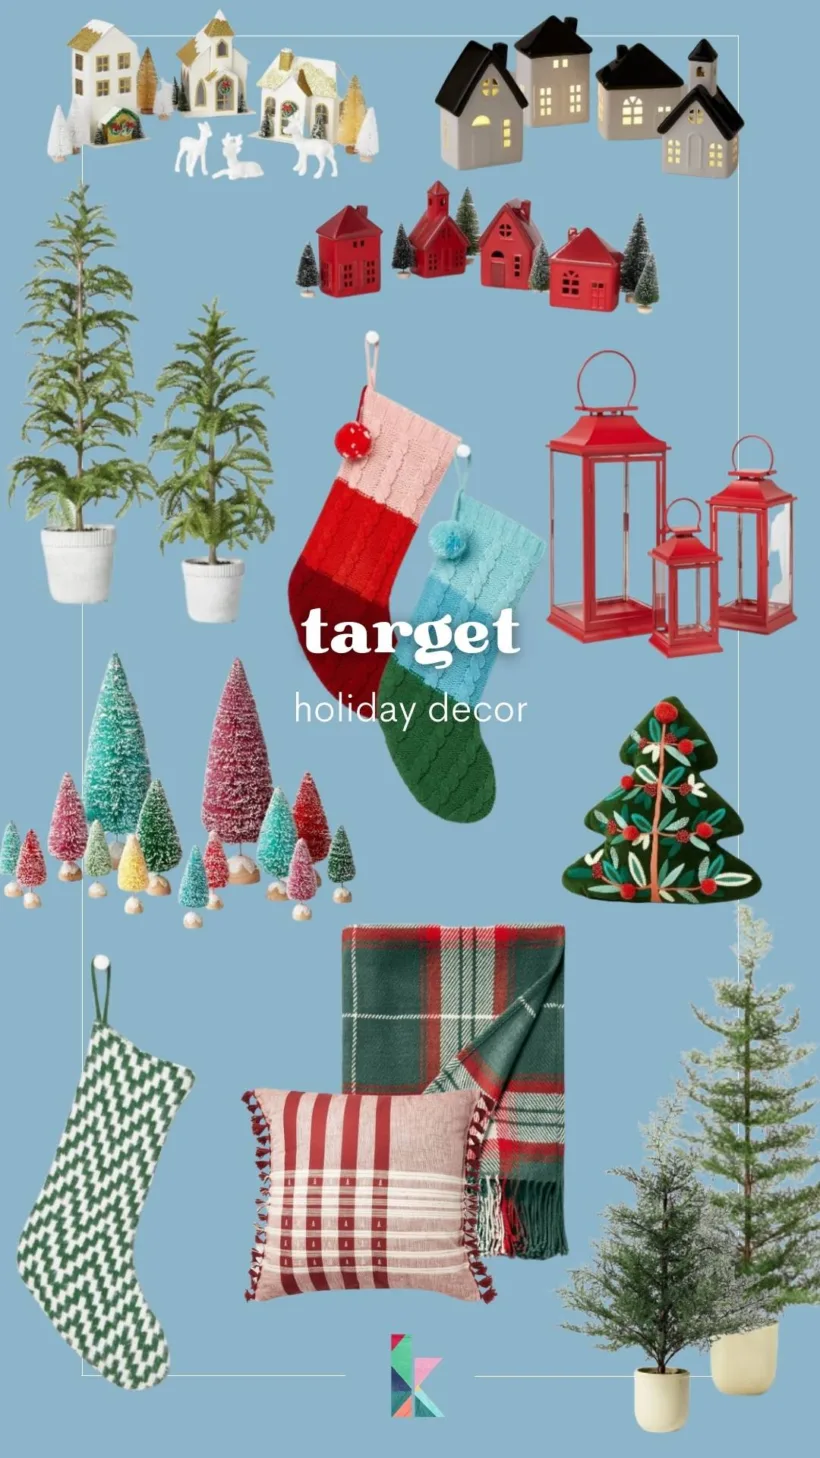 2022 Christmas decor picks from Target